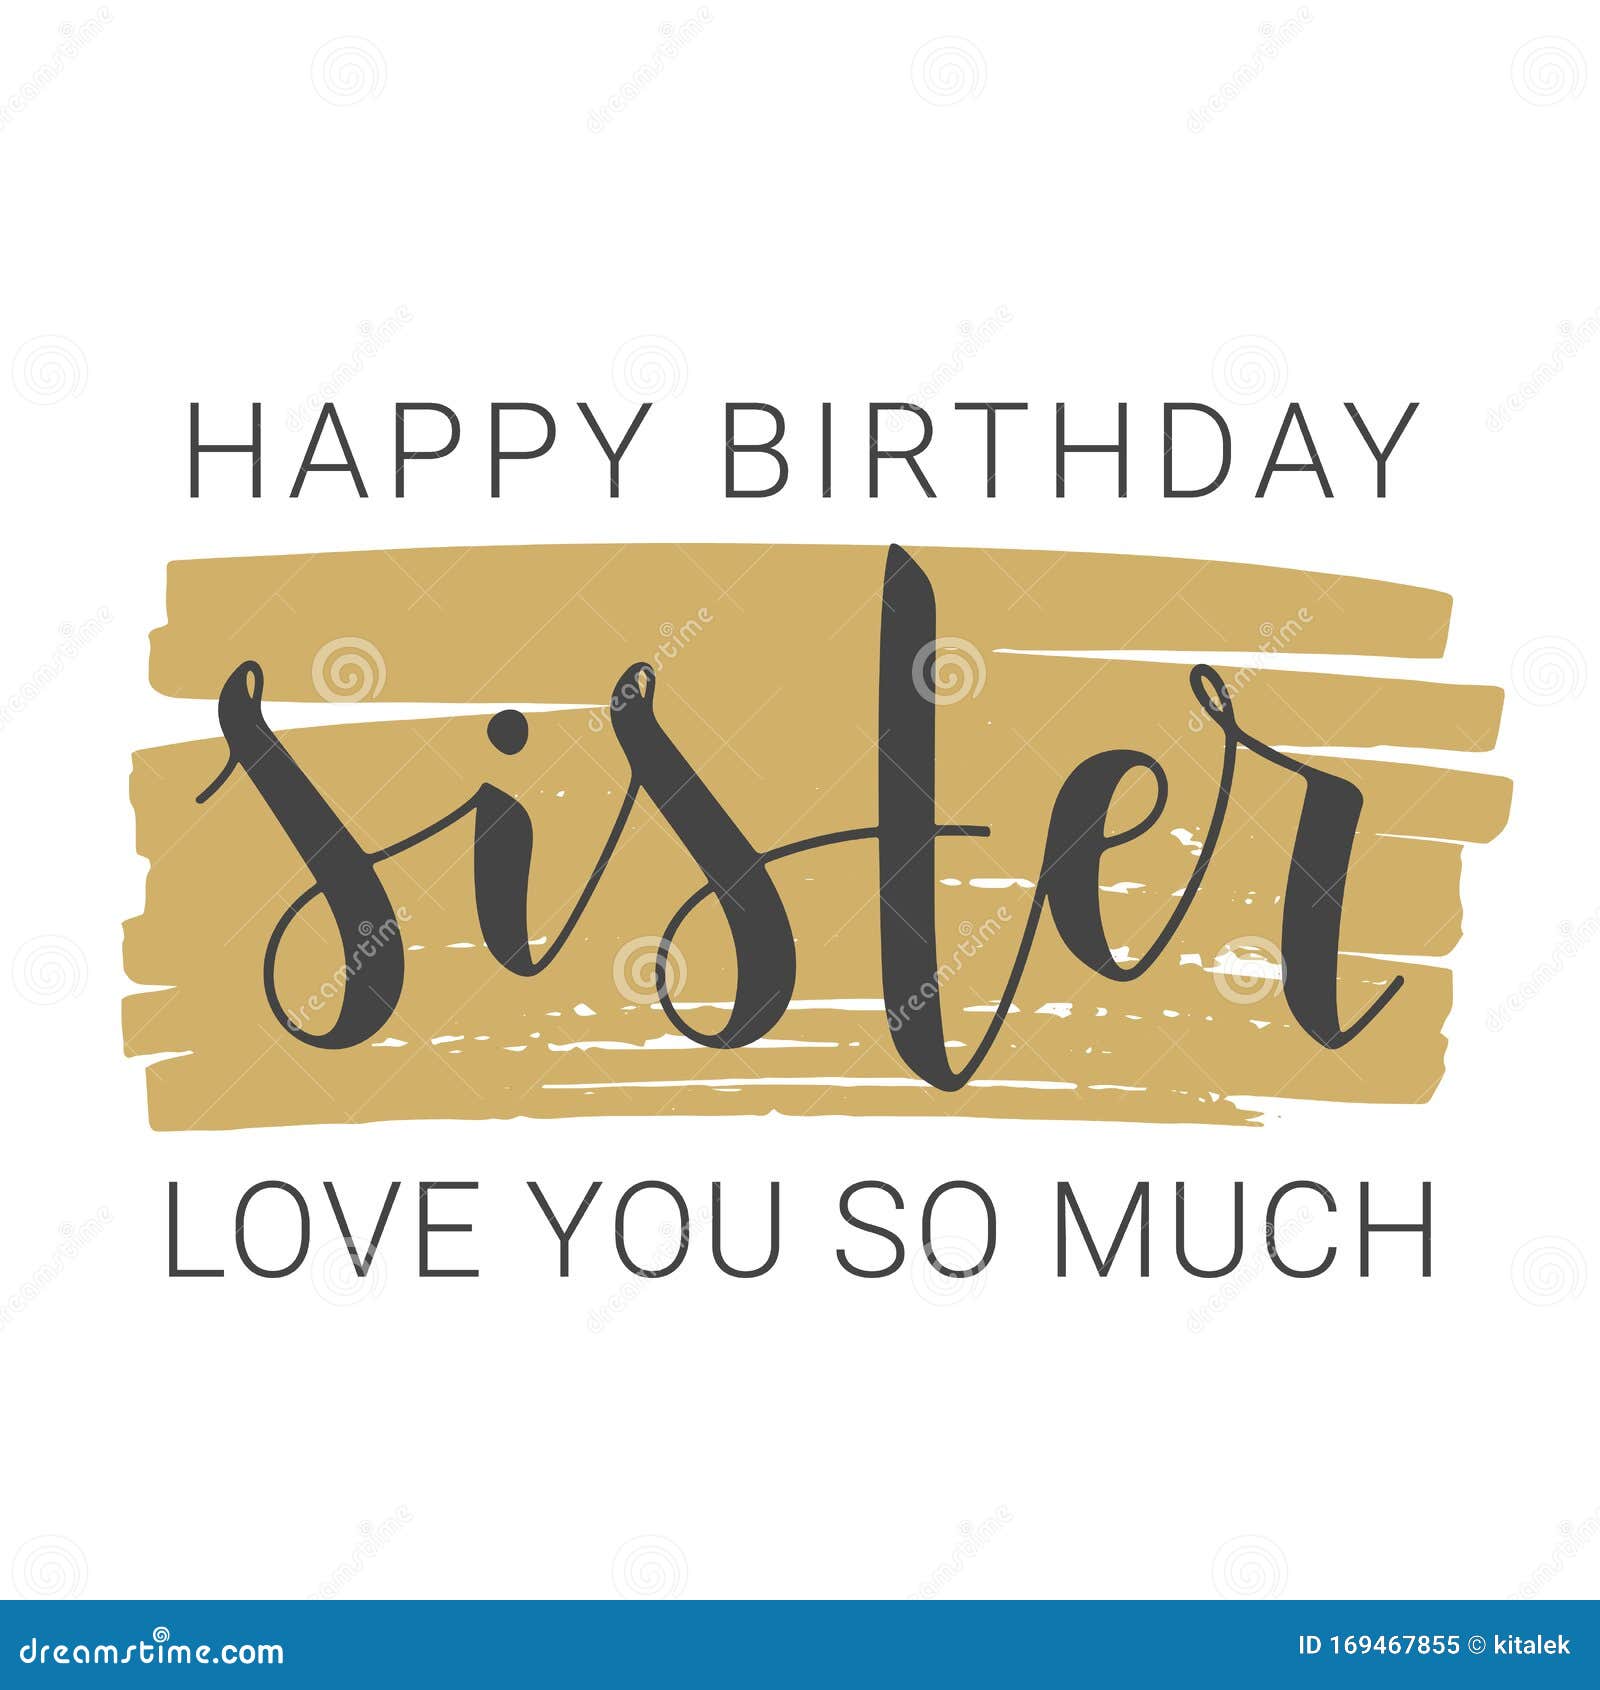 Download Handwritten Lettering Of Happy Birthday Sister. Vector ...